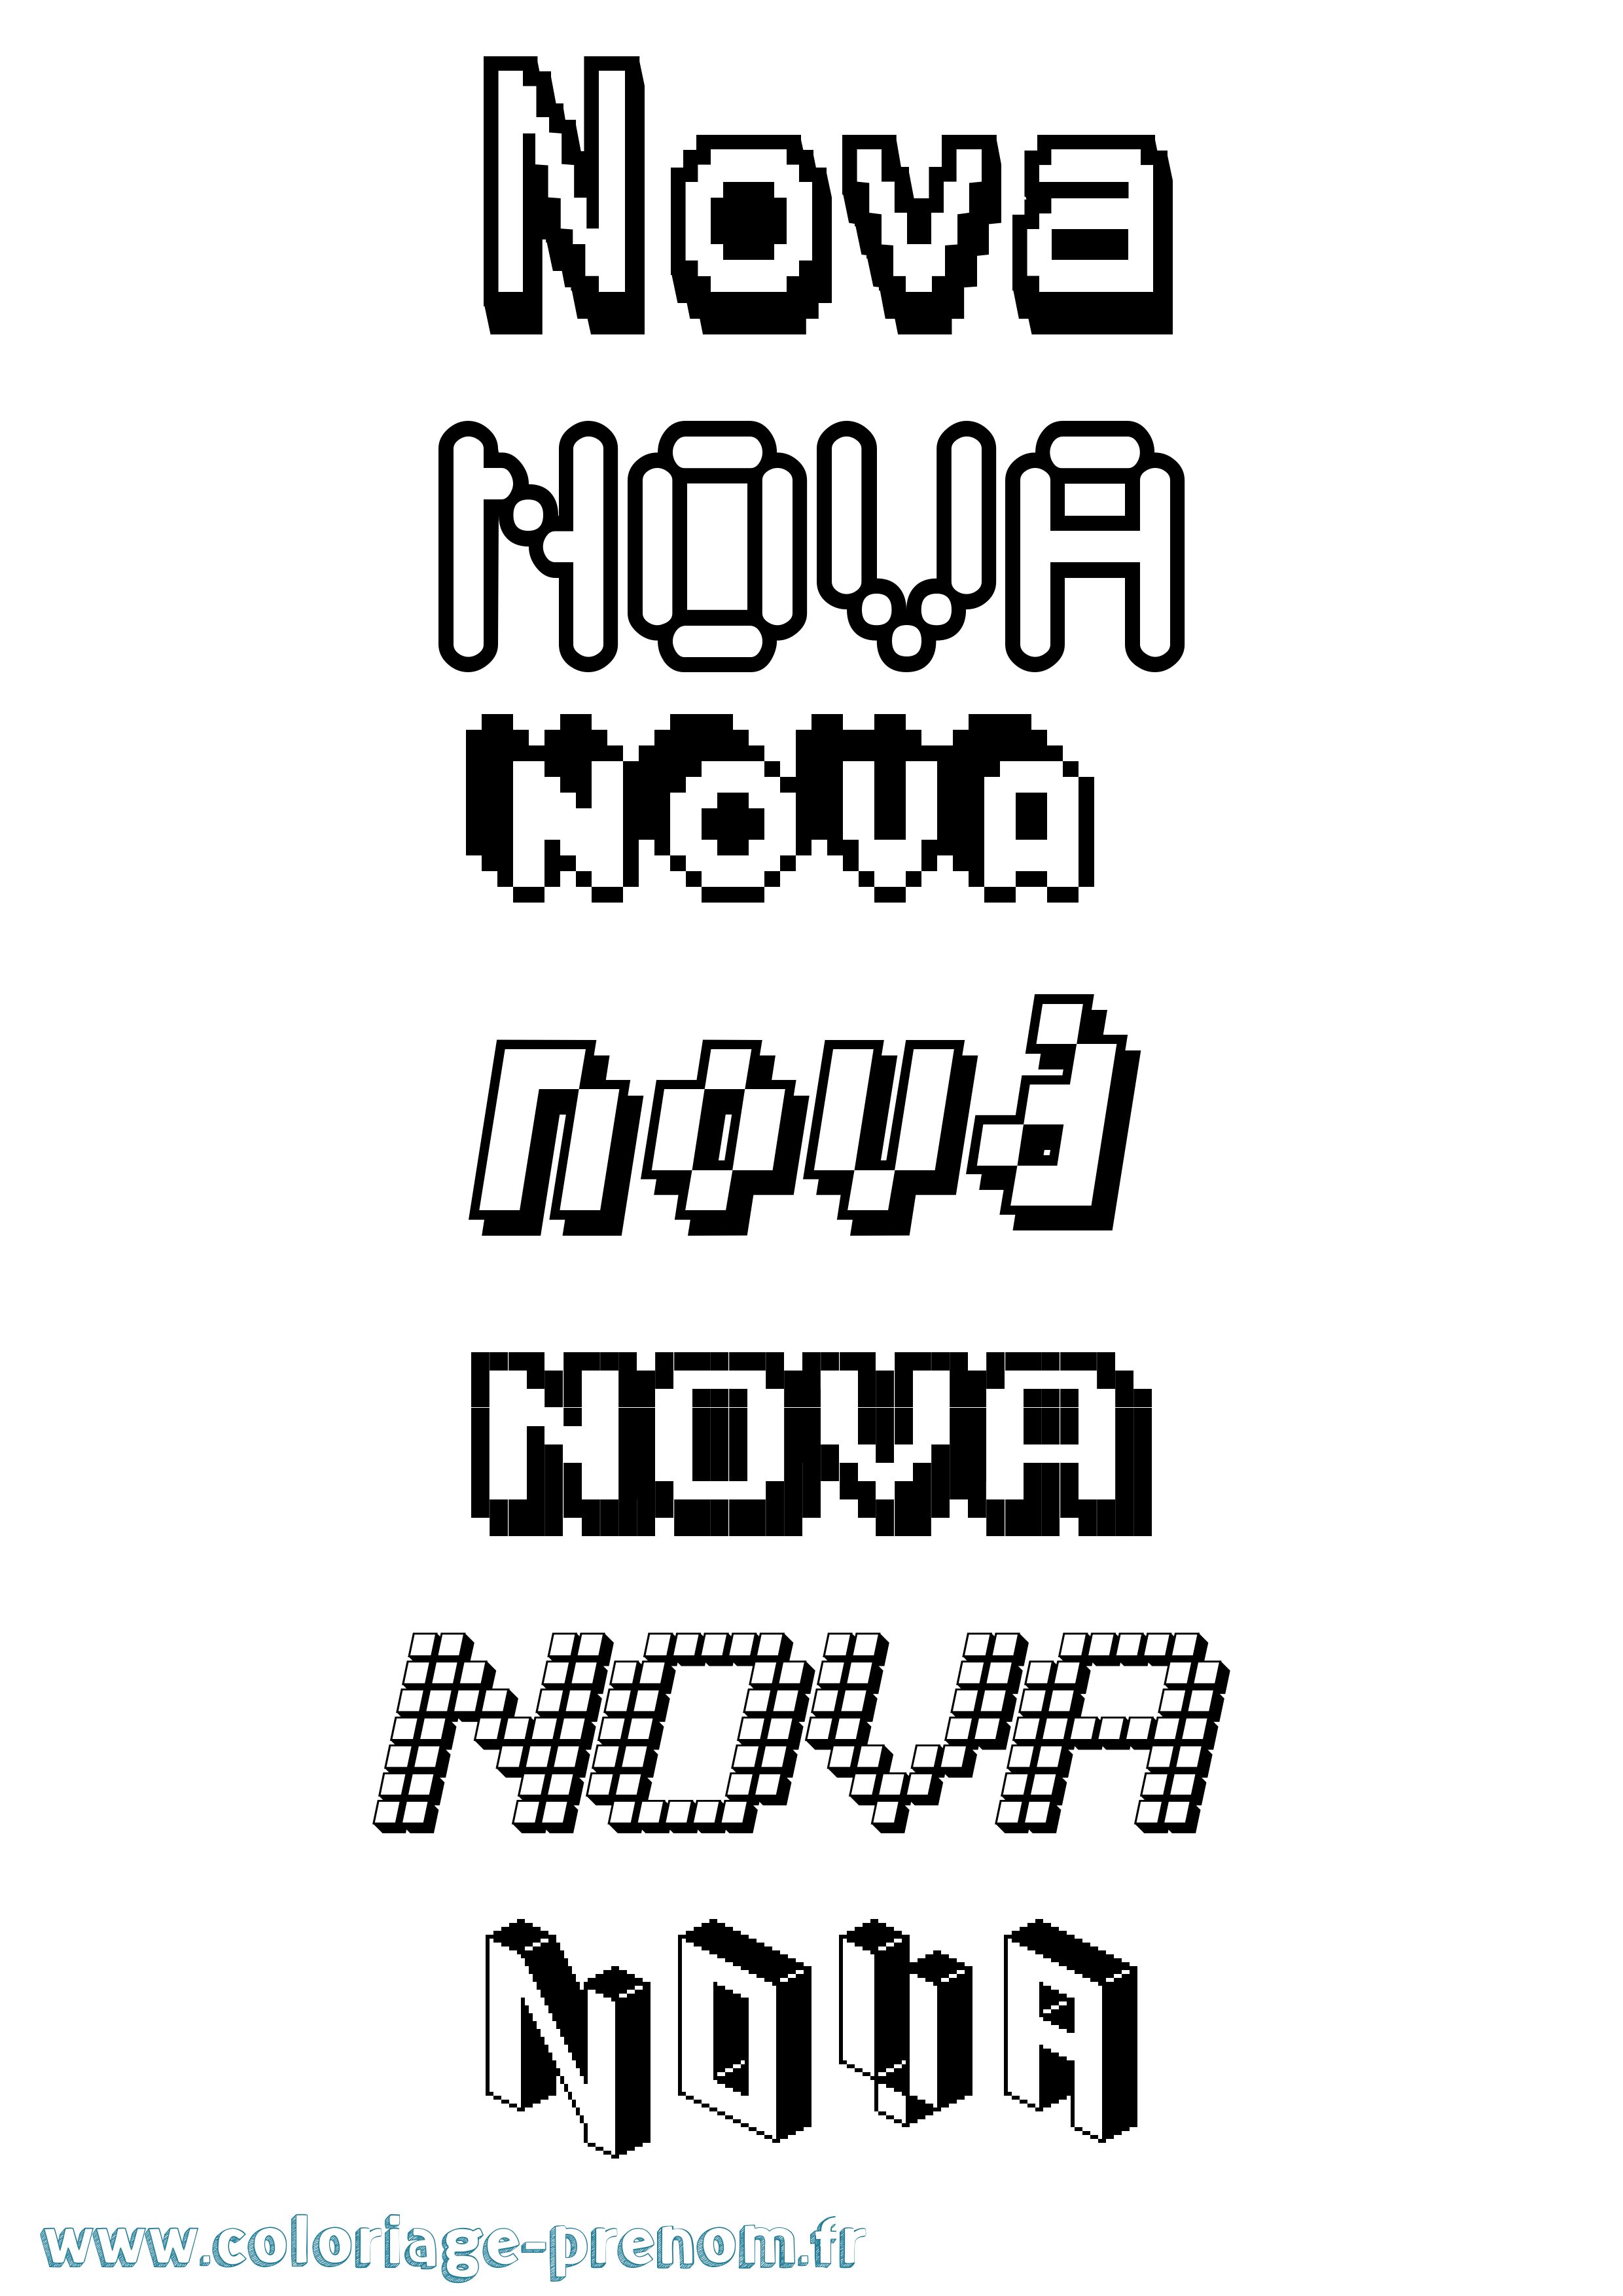 Coloriage prénom Nova Pixel